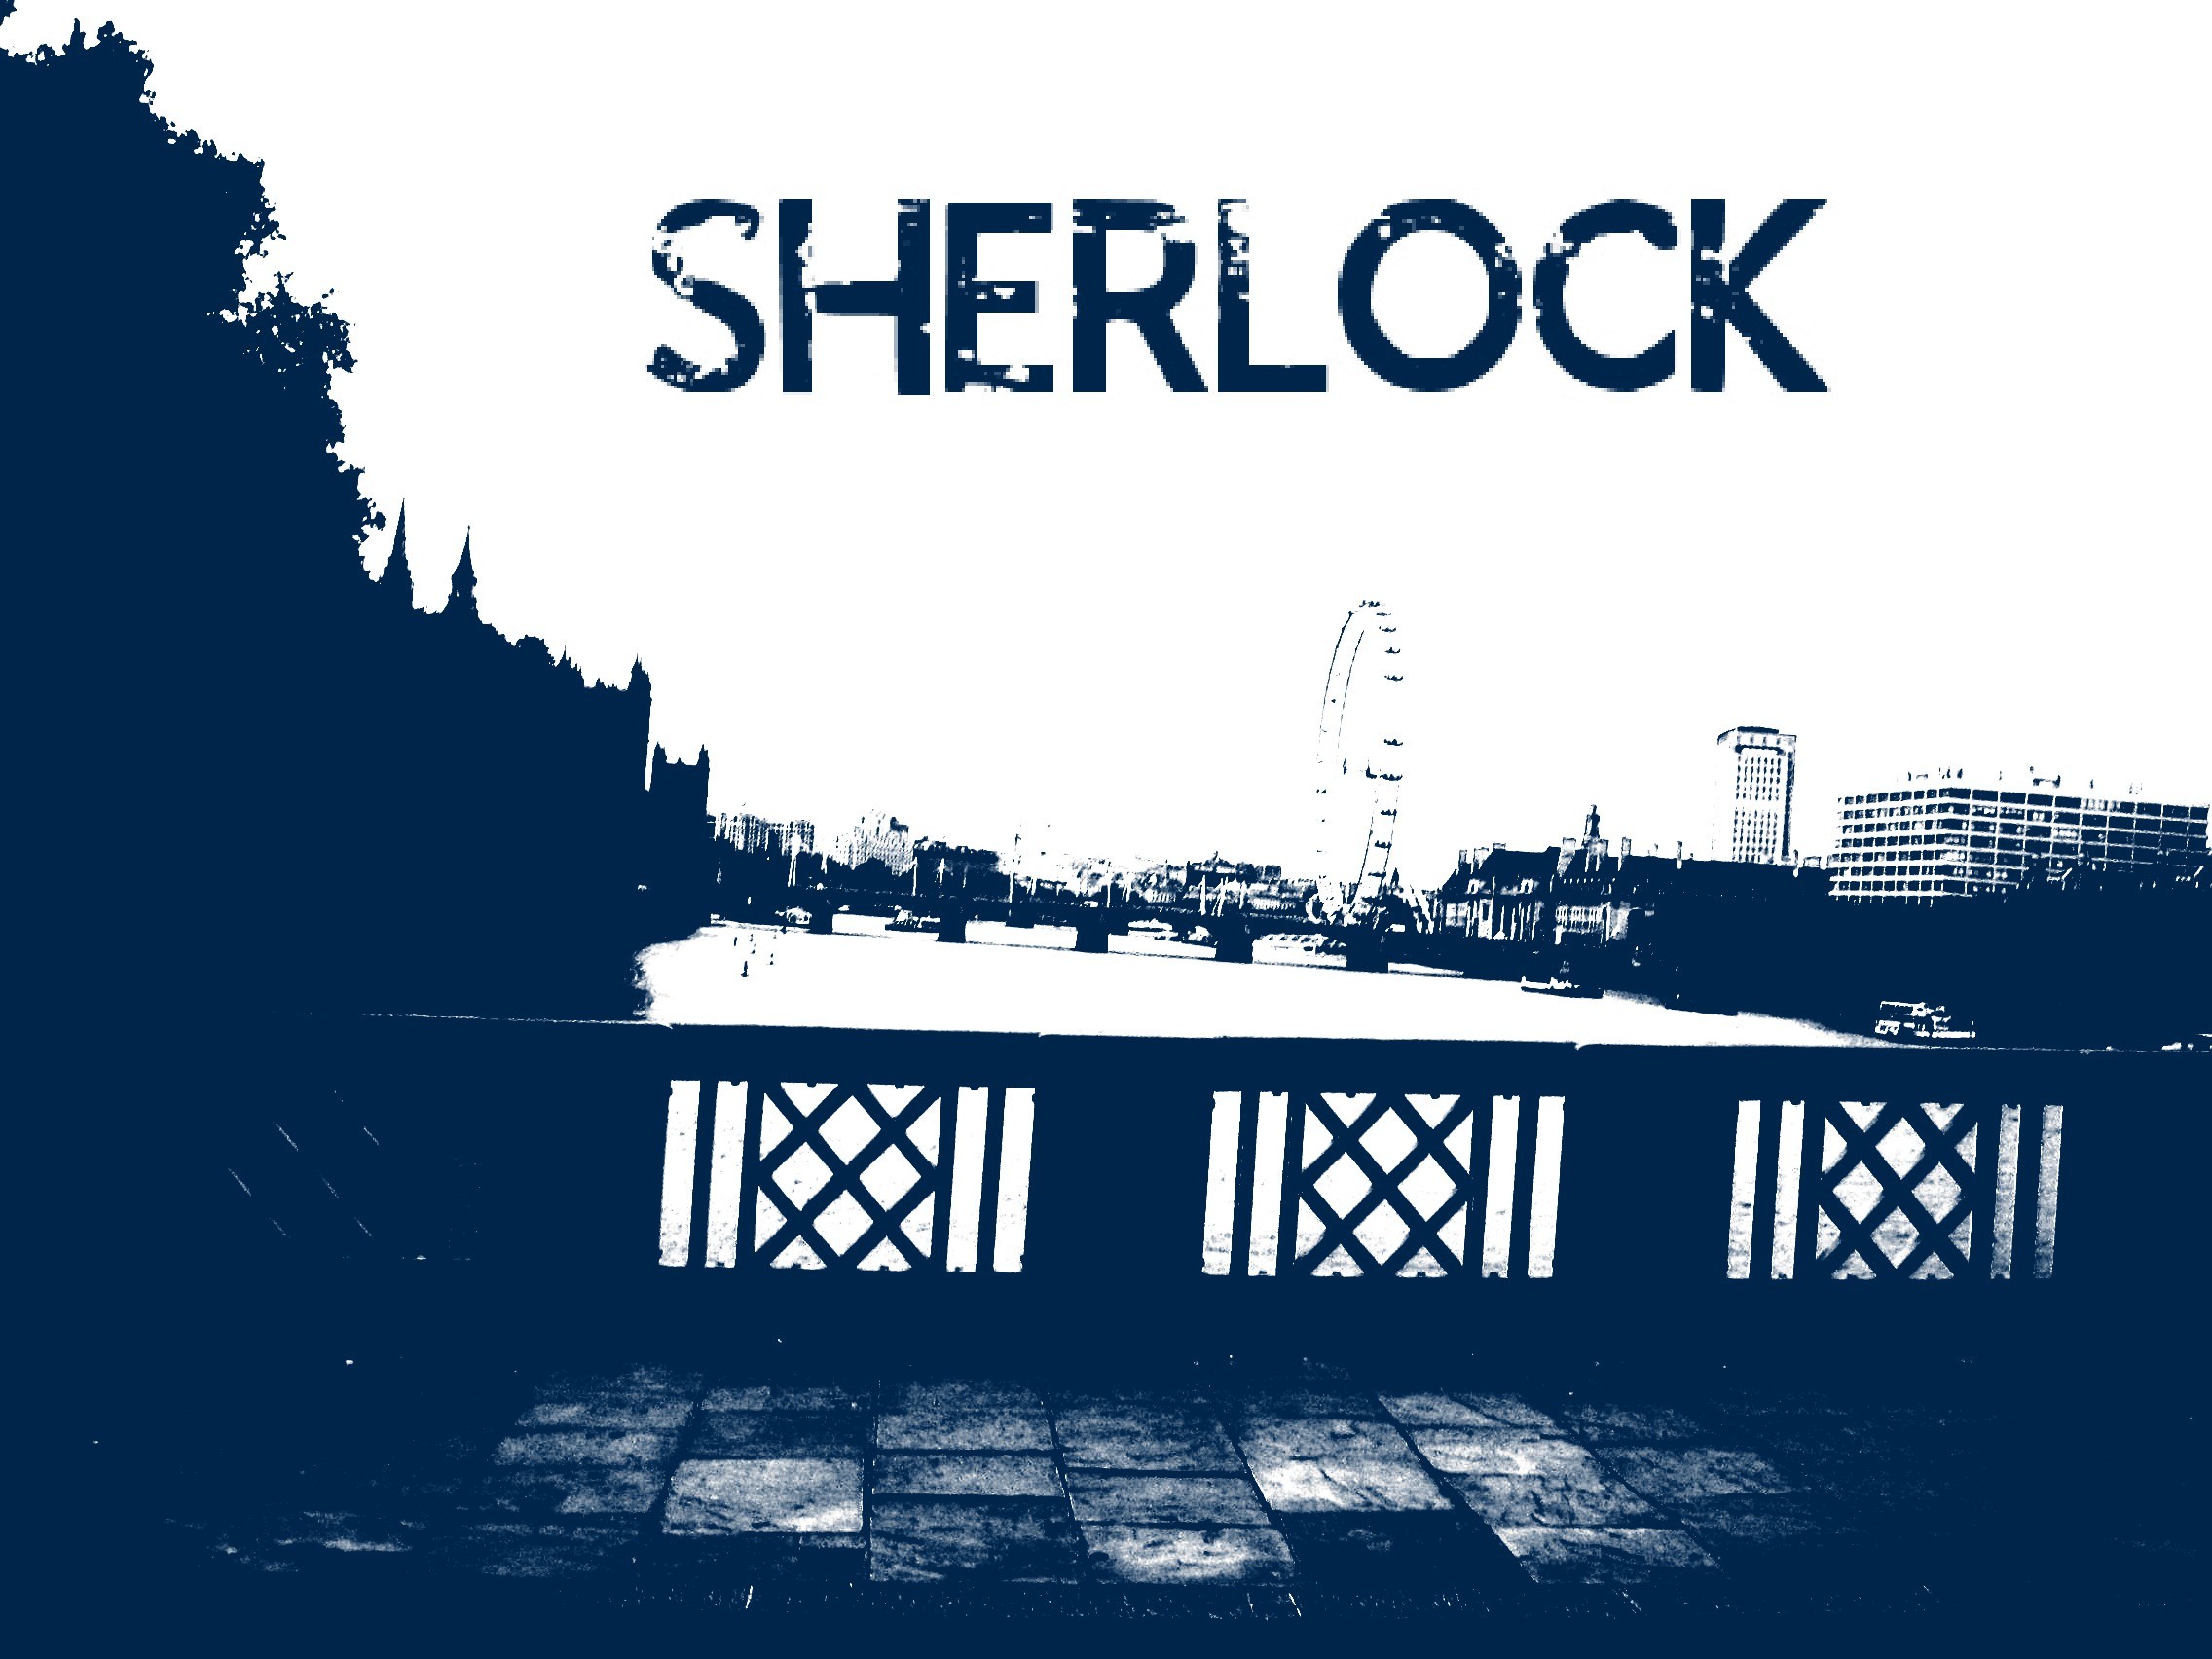 2272x1704 Sherlock by LittleRedHatter Sherlock by LittleRedHatter